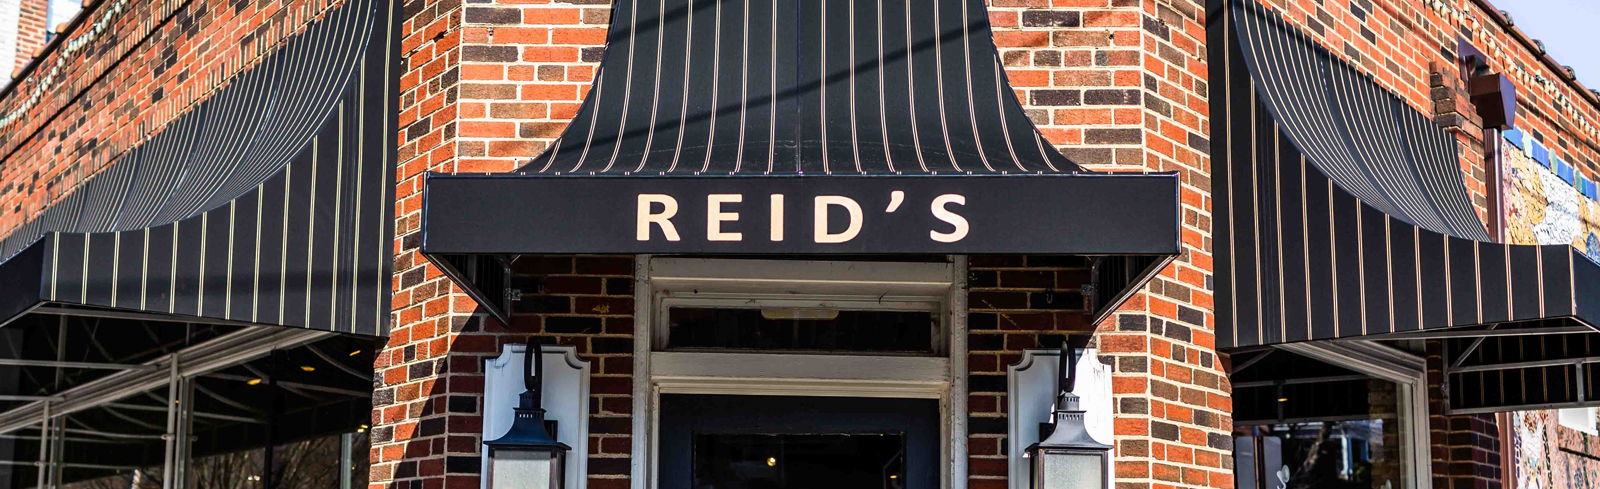 Reid's Fine Furnishings Roanoke Showroom brick storefront